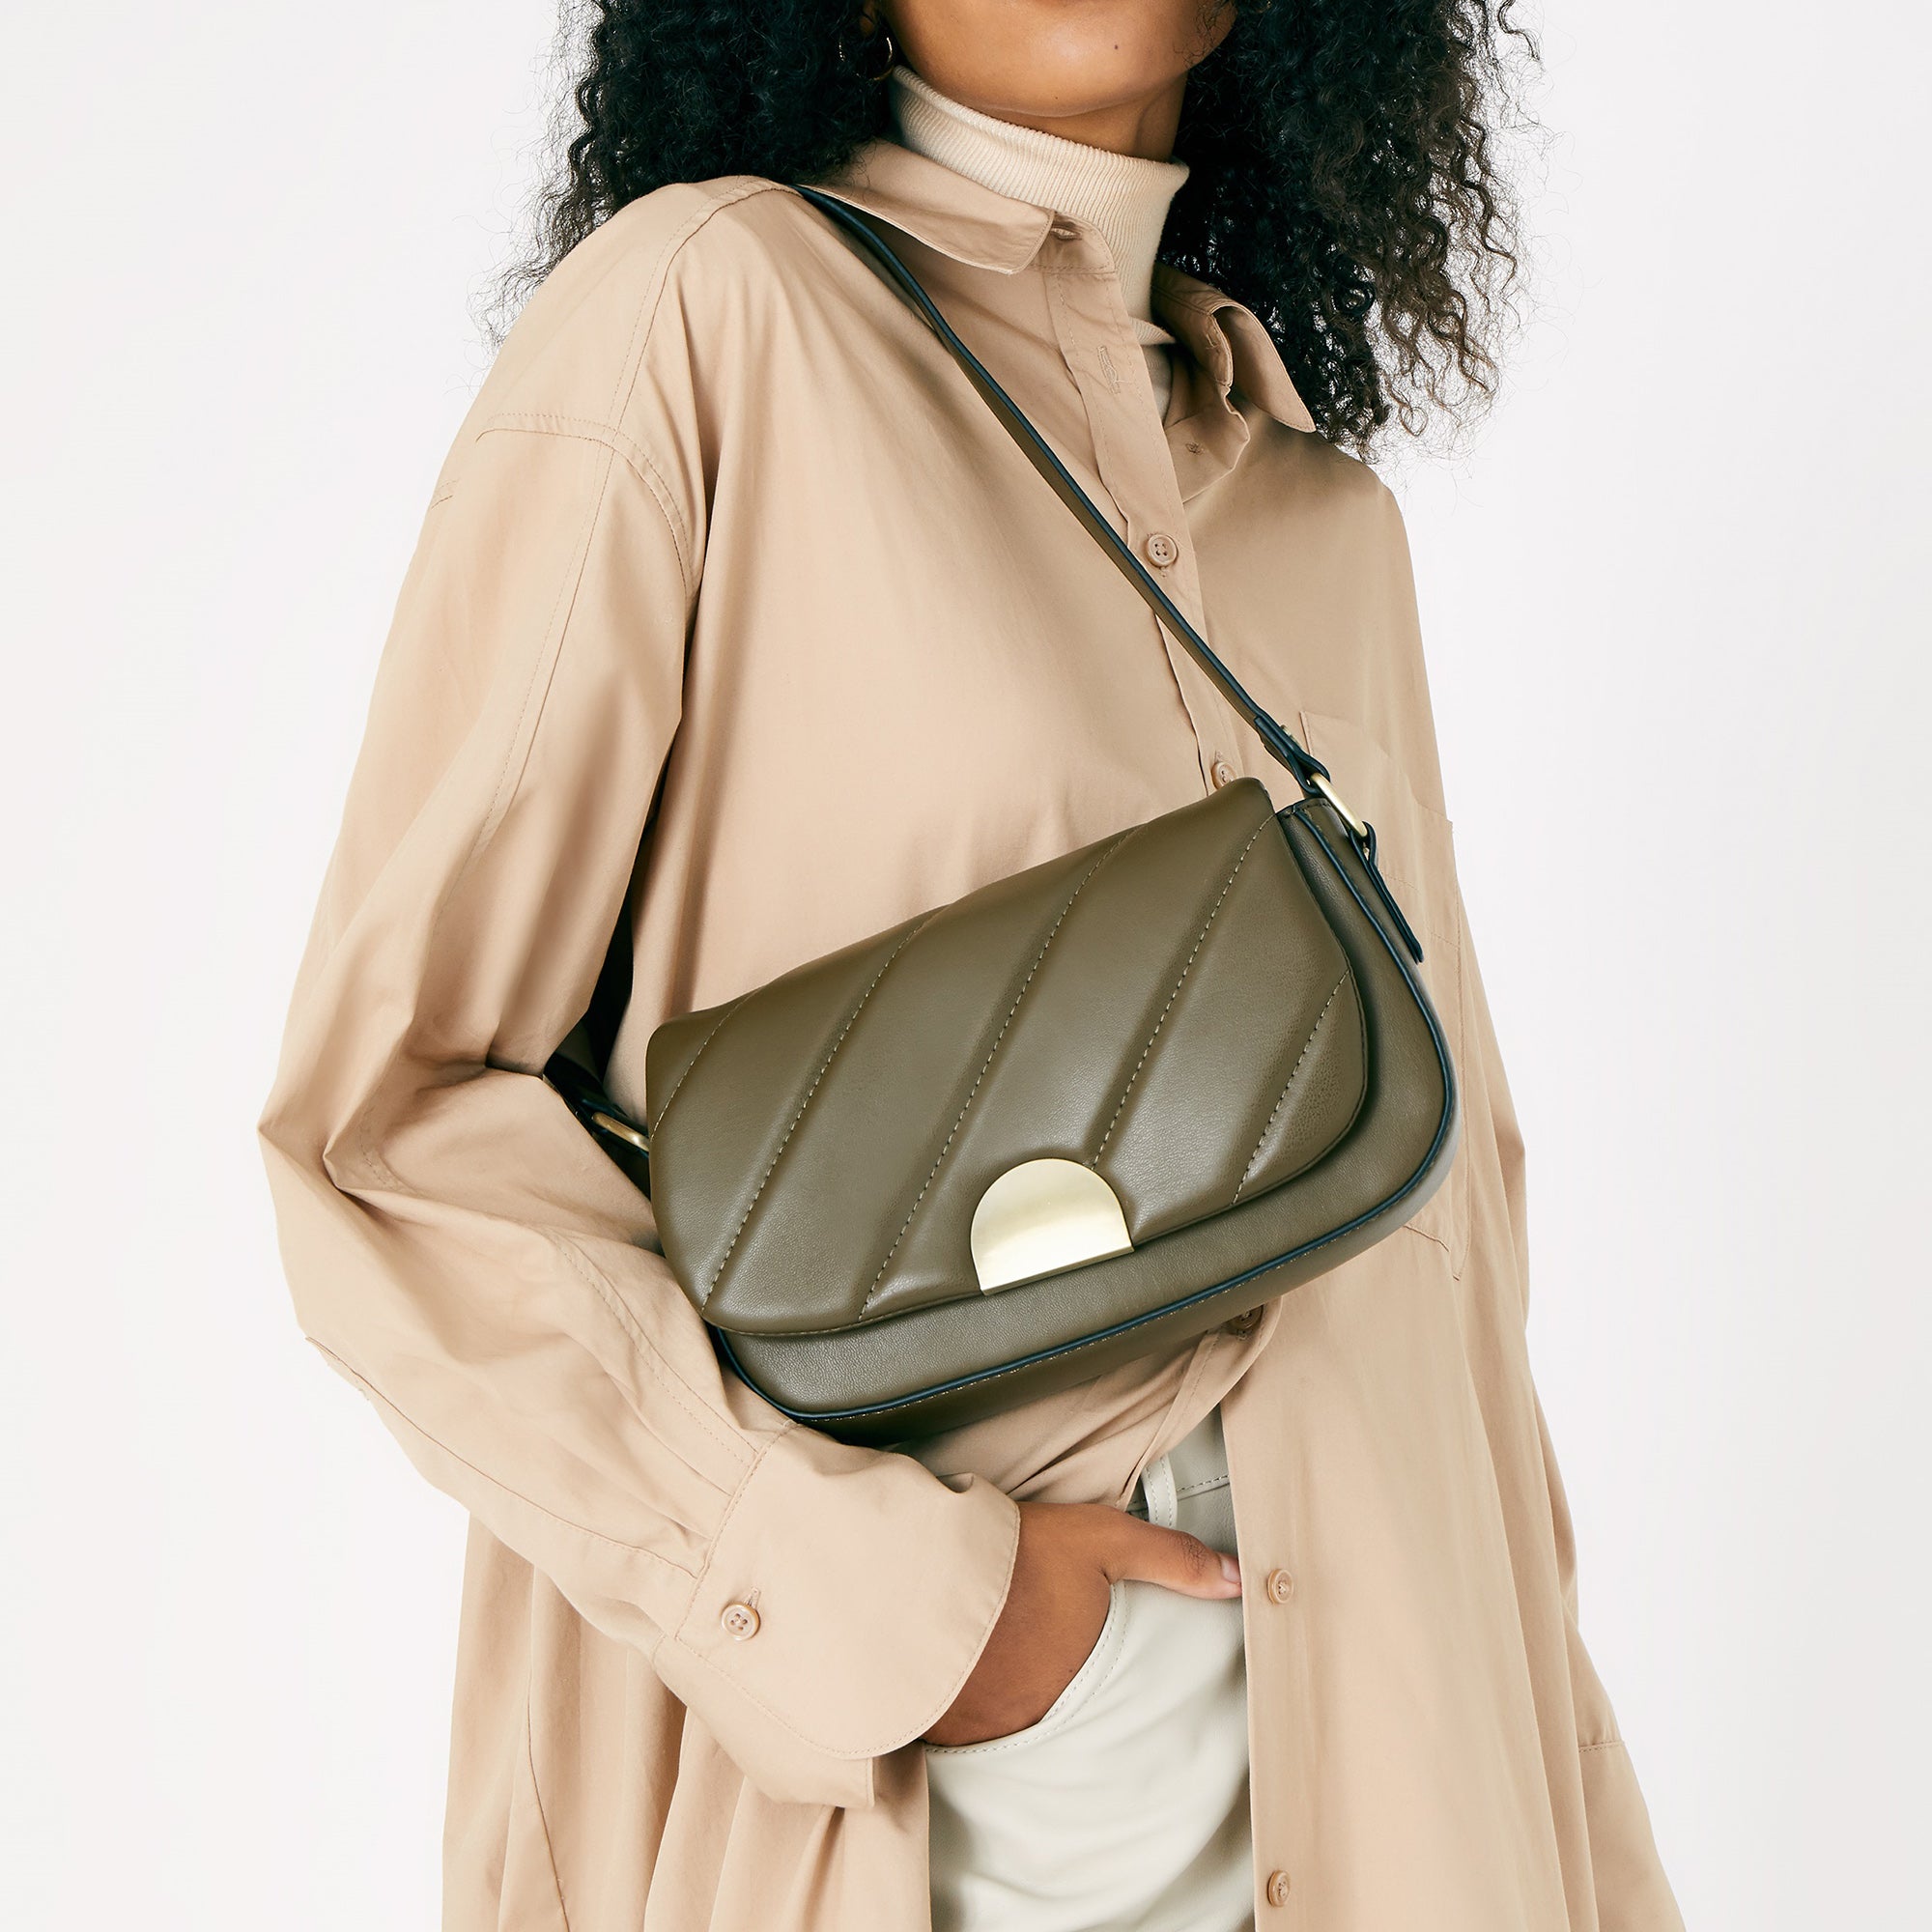 Accessorize London Women's Faux Leather Khaki Lara Quilted Lock Shoulder Bag